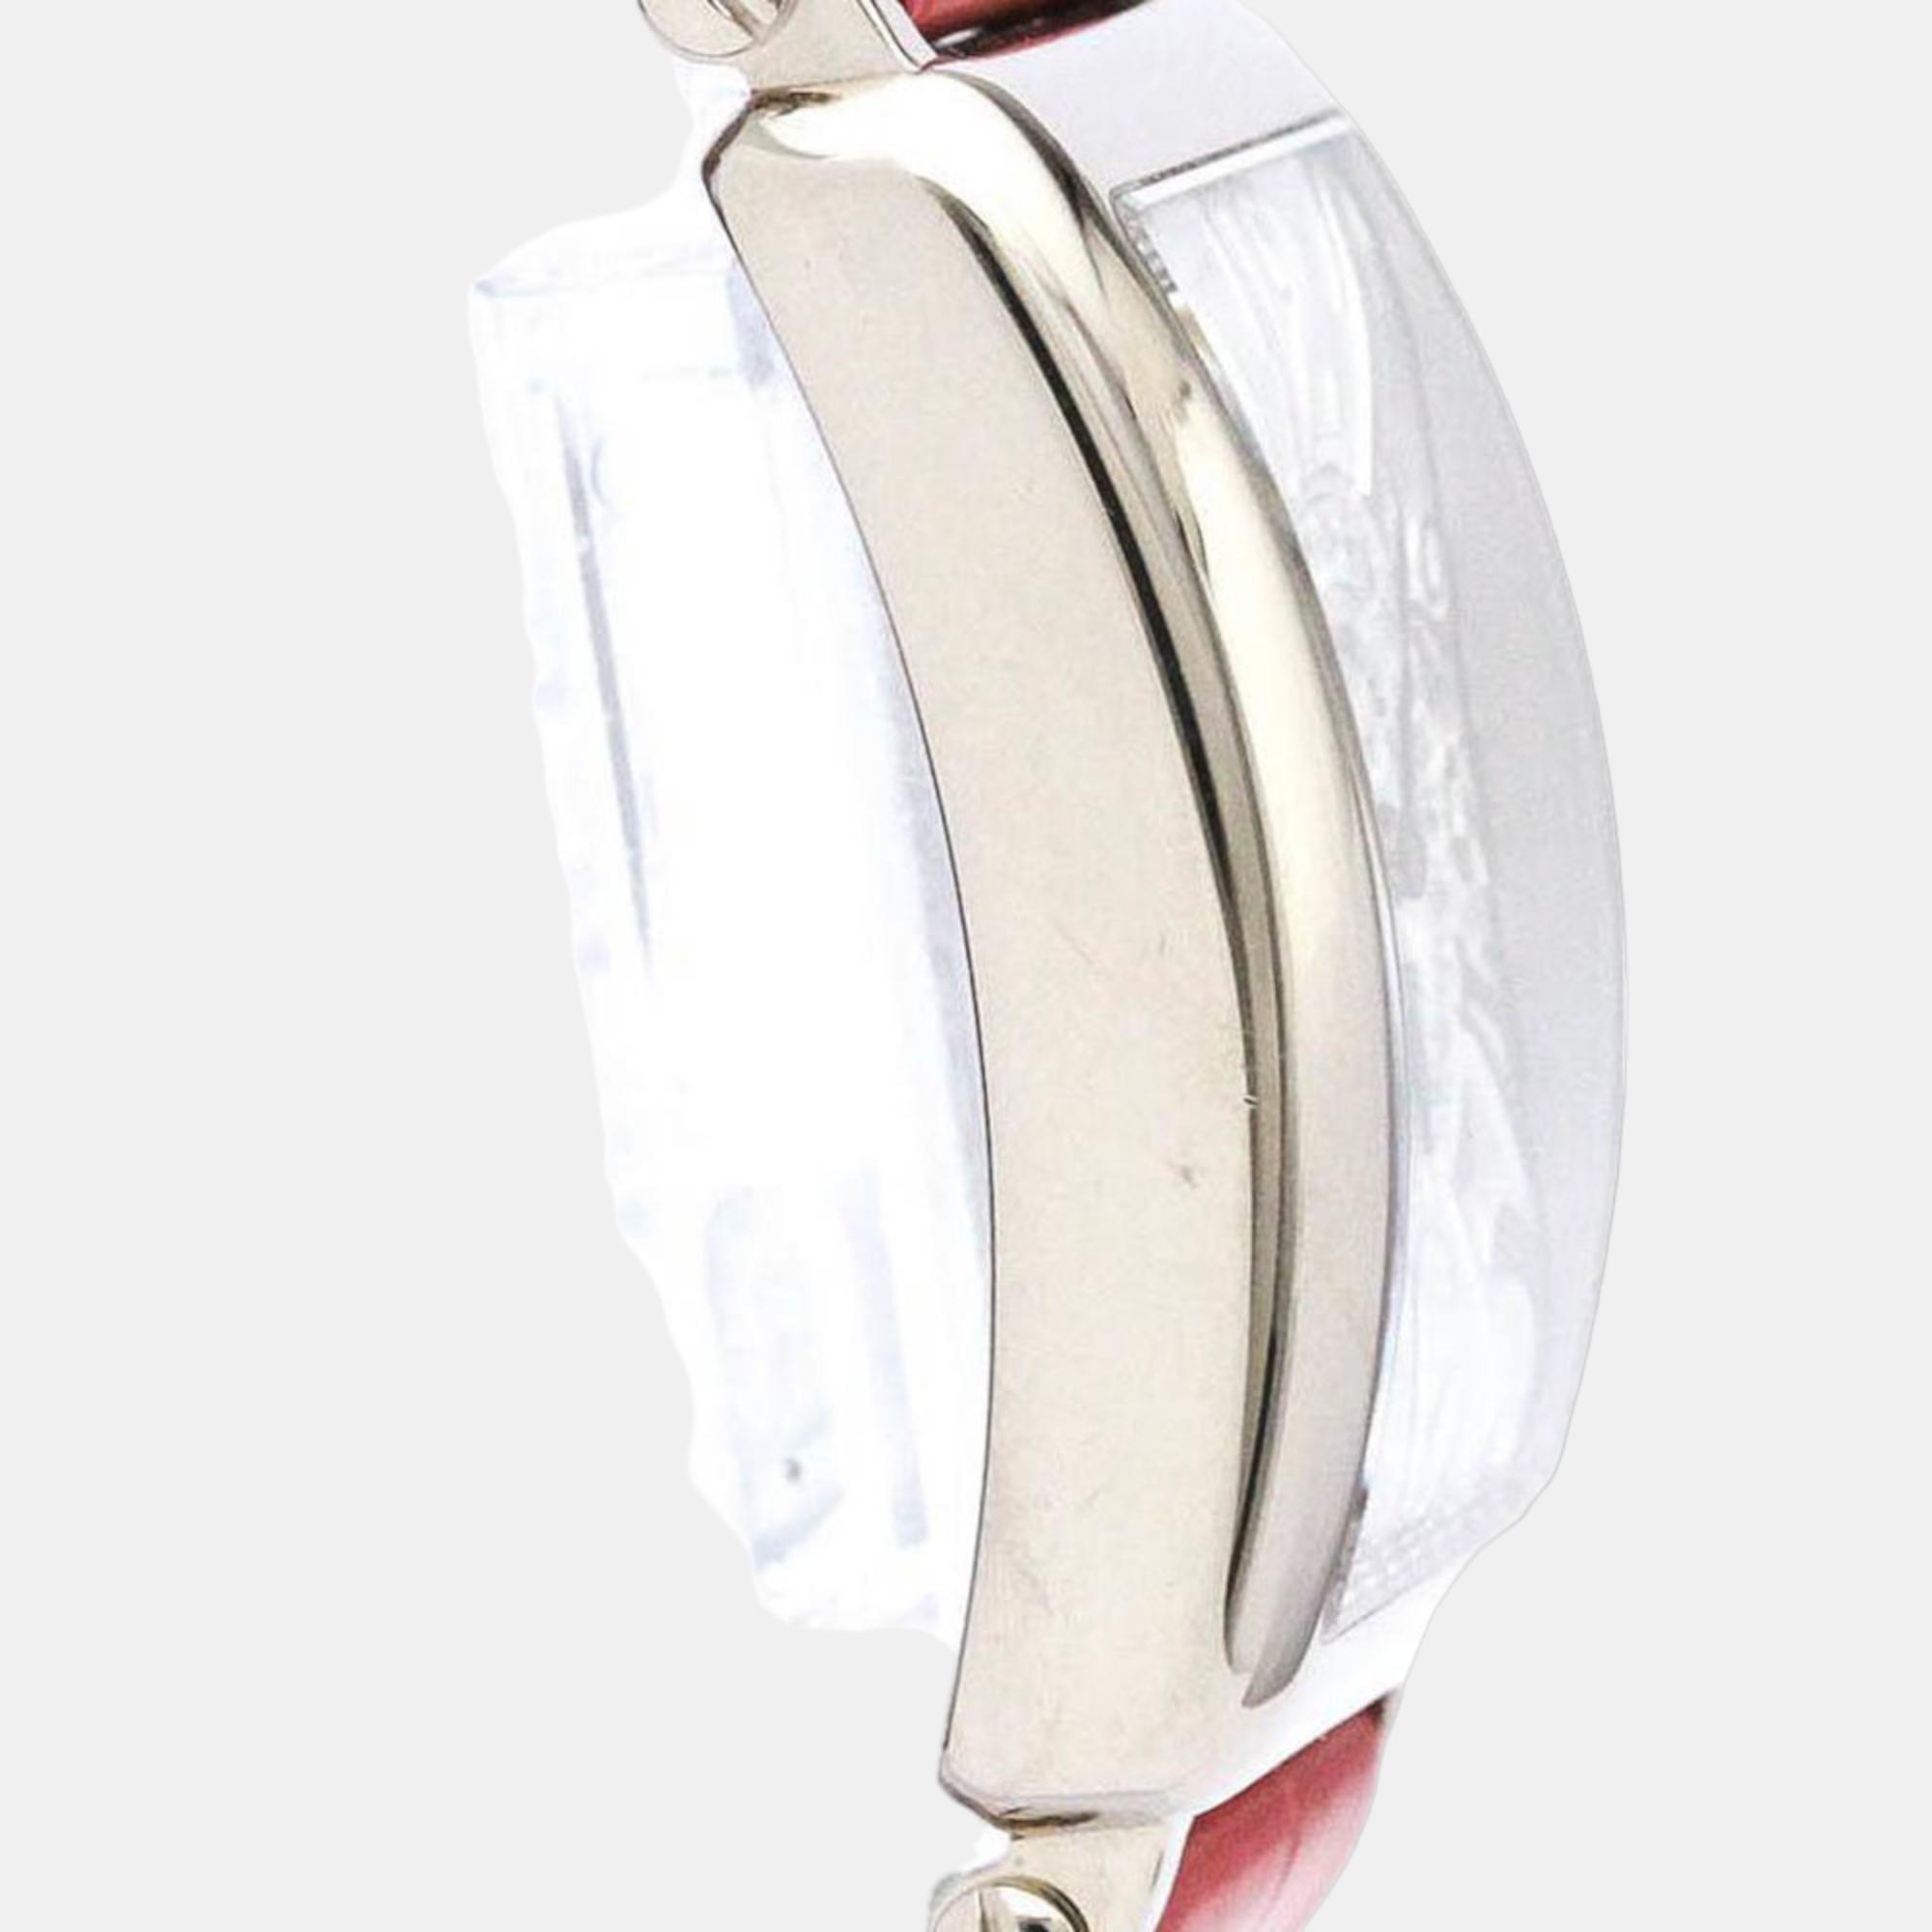 Franck Muller Silver 18k White Gold Long Island 952 QZ CD 1R Quartz Women's Wristwatch 23 Mm